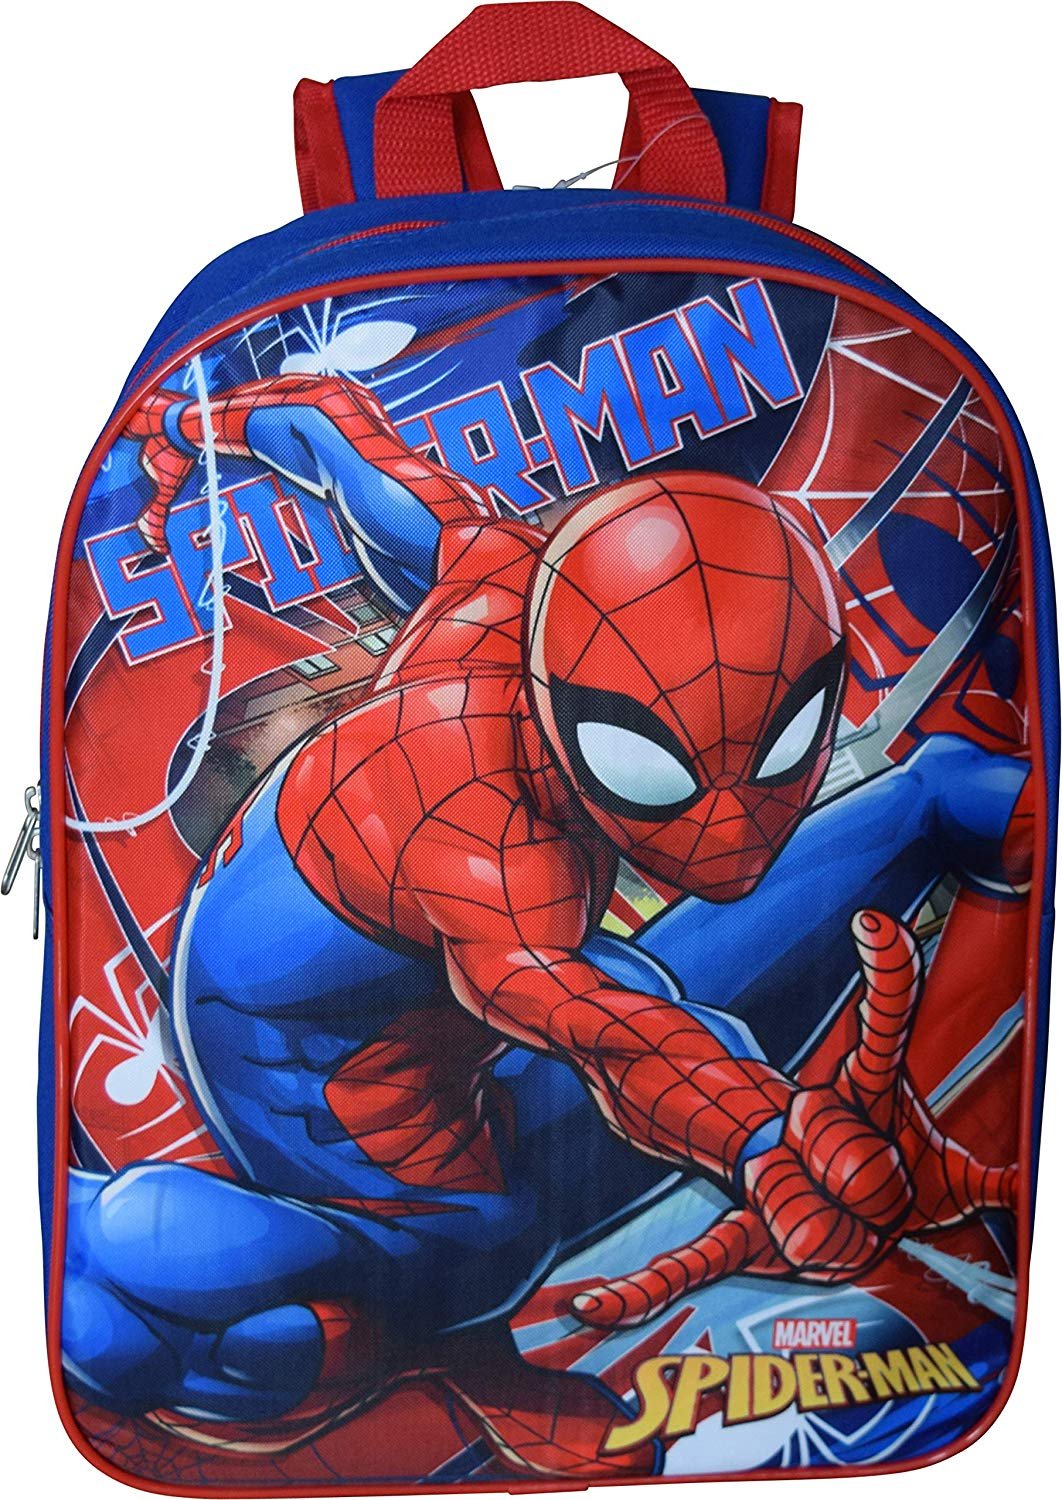 Spiderman Sports Backpack School Bag New 